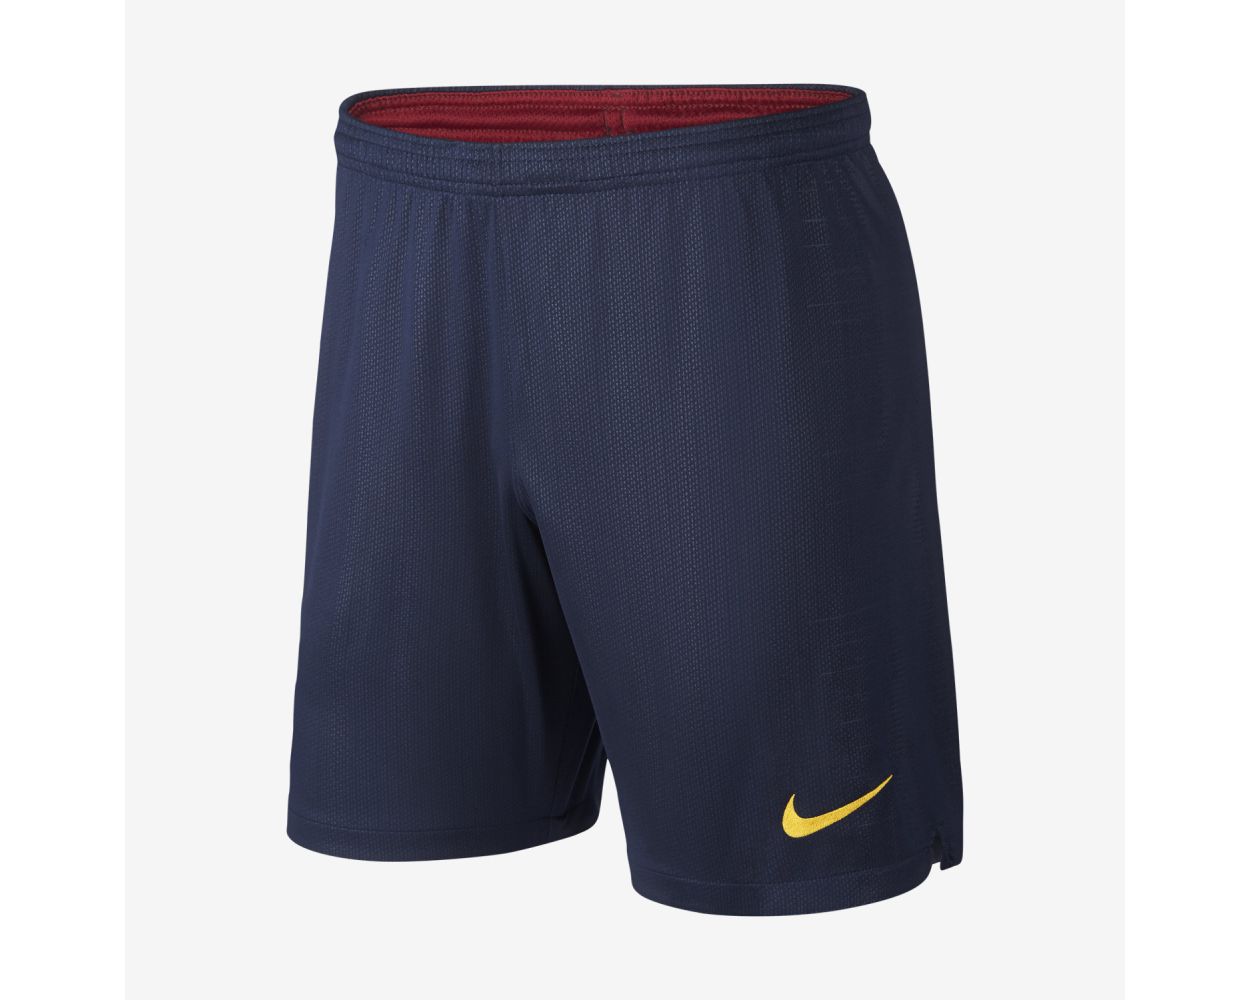 Nike Barcelona Home/Away Shorts Mens 2018/19 - Navy